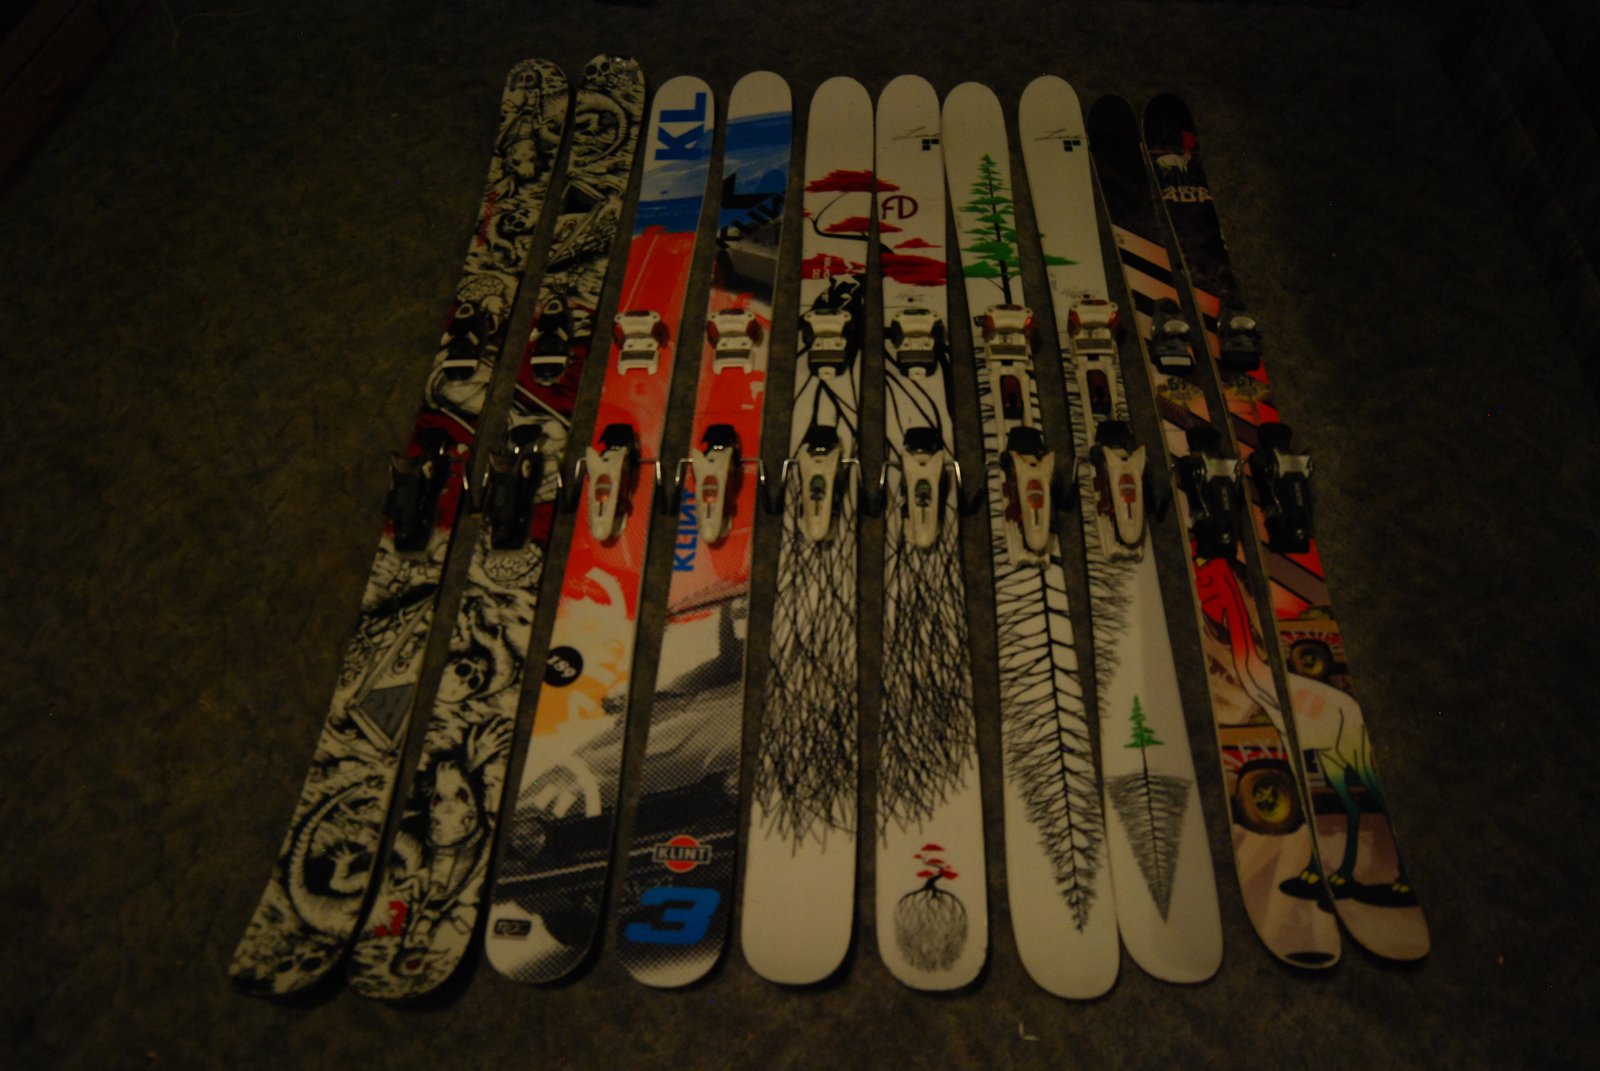 2011-12 ski quiver